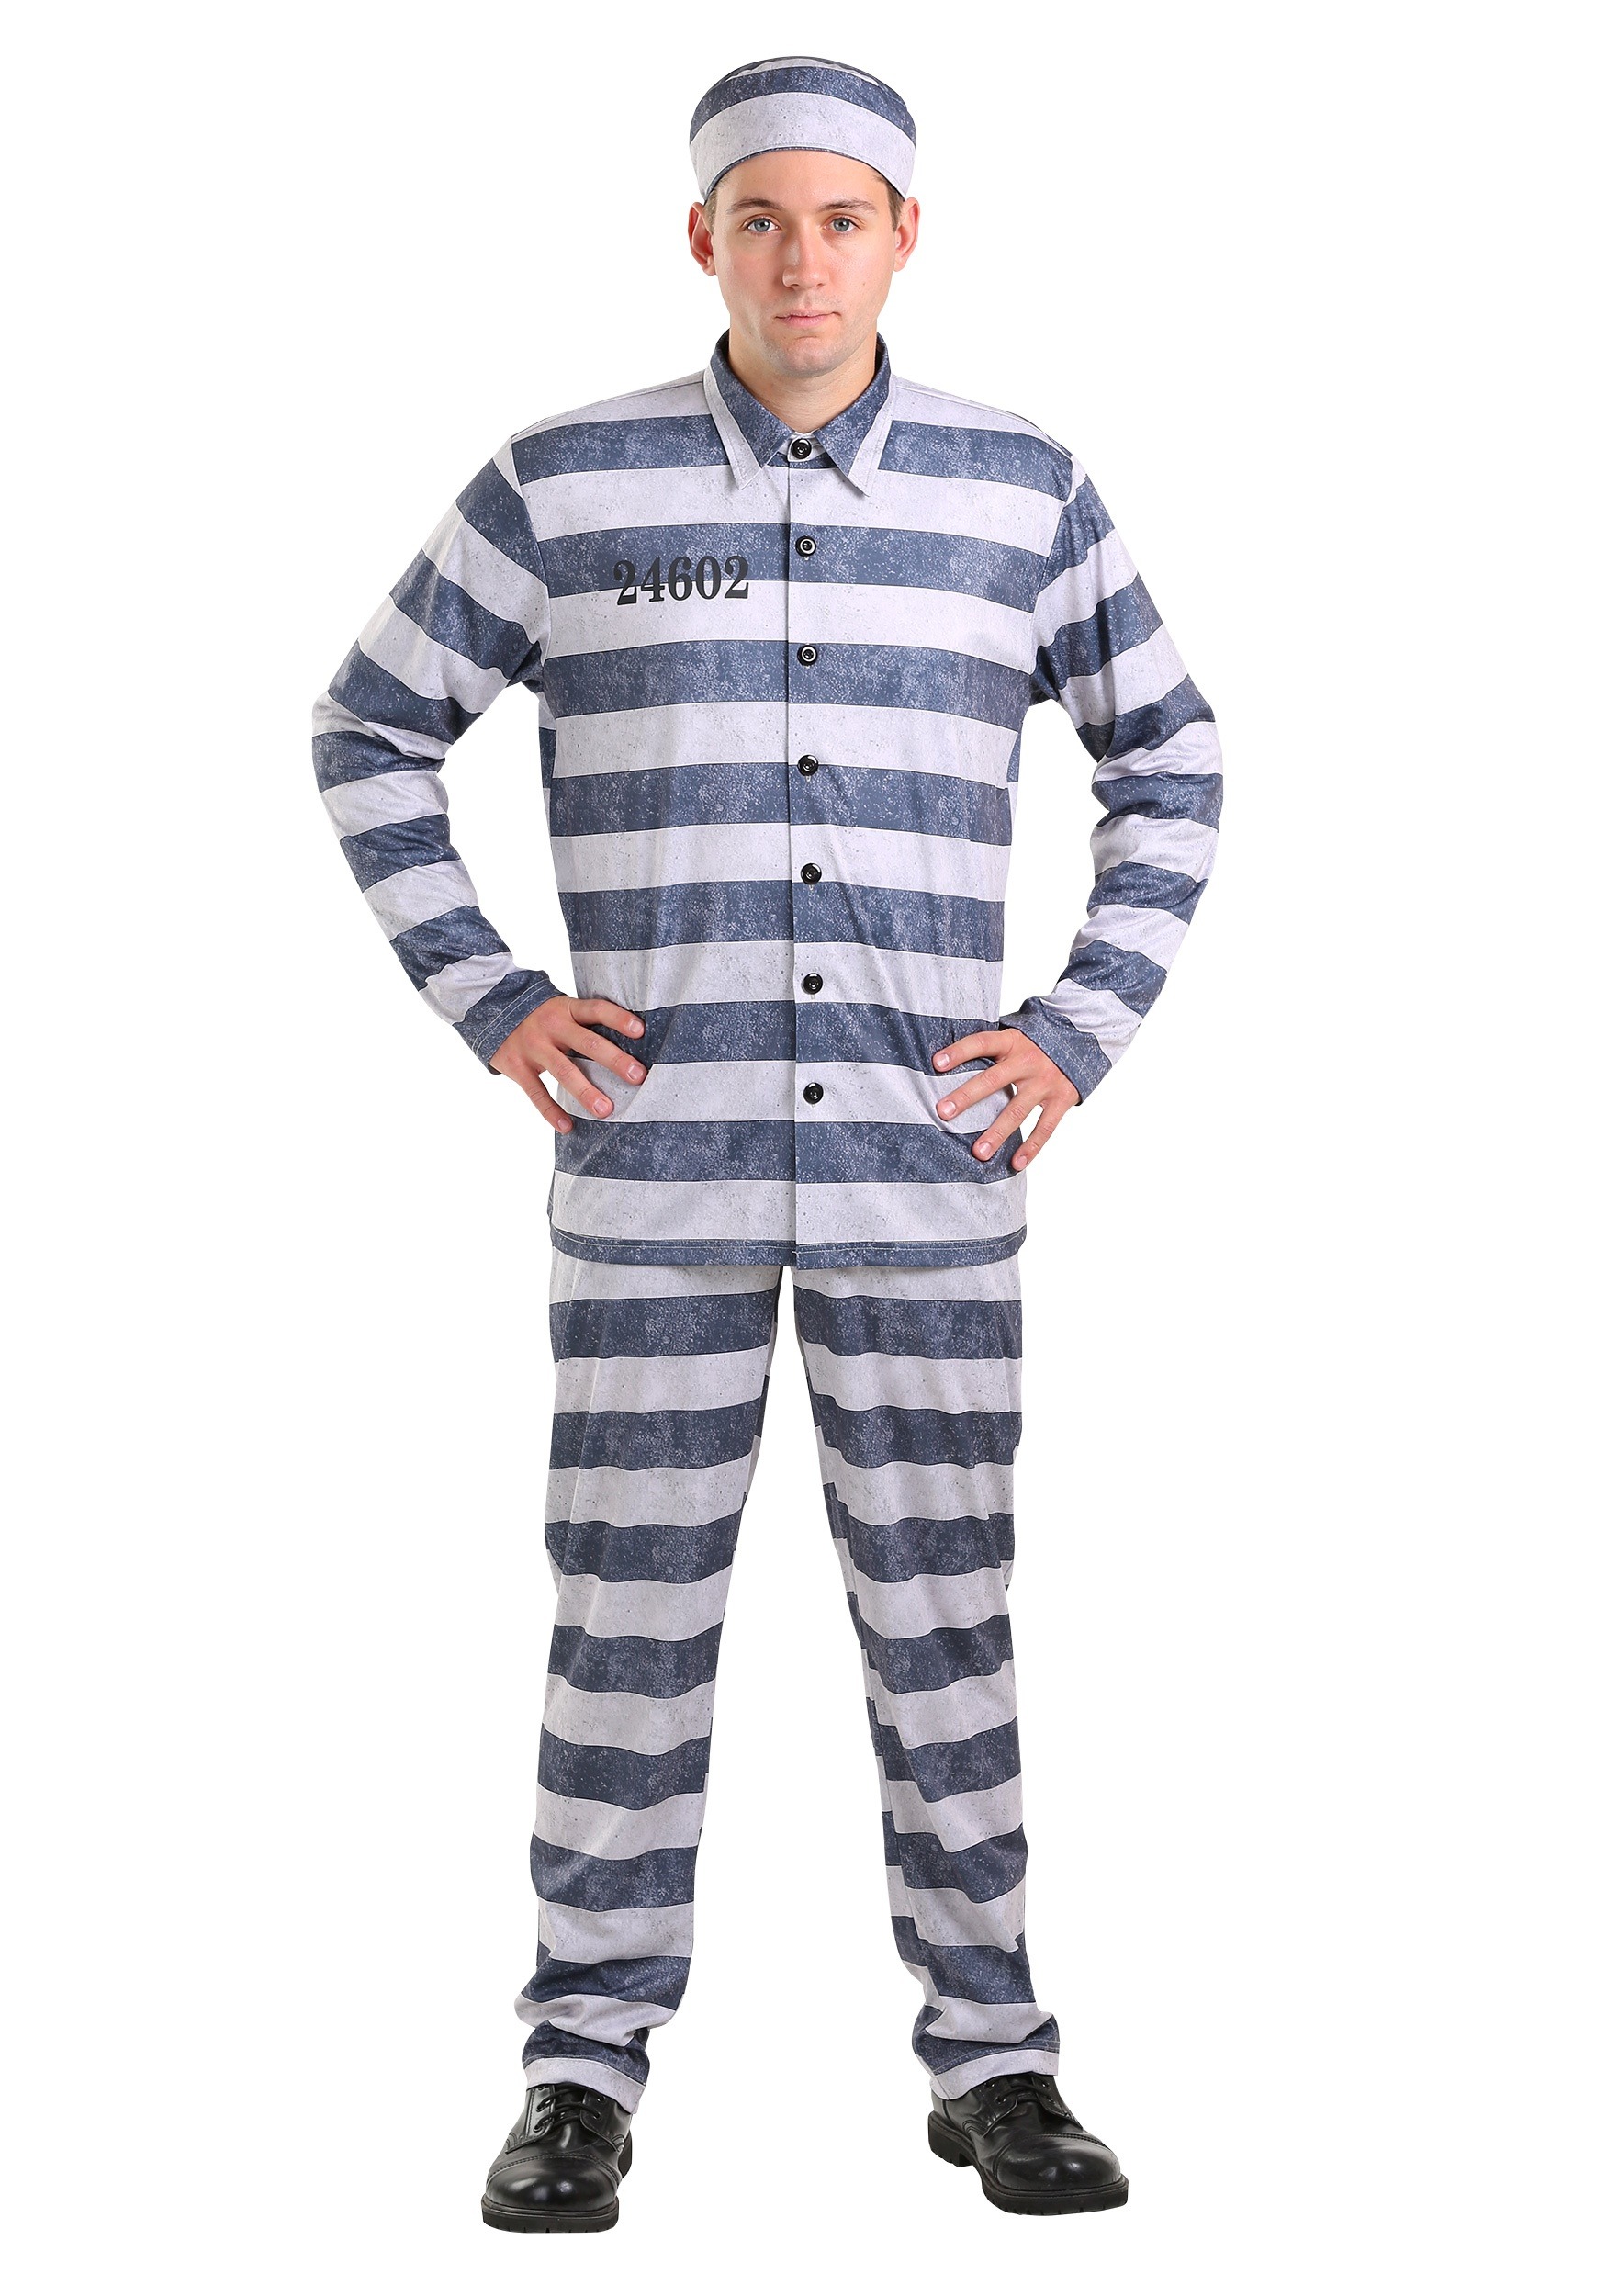 Photos - Fancy Dress Vintage FUN Costumes  Prisoner Costume for Men Gray 